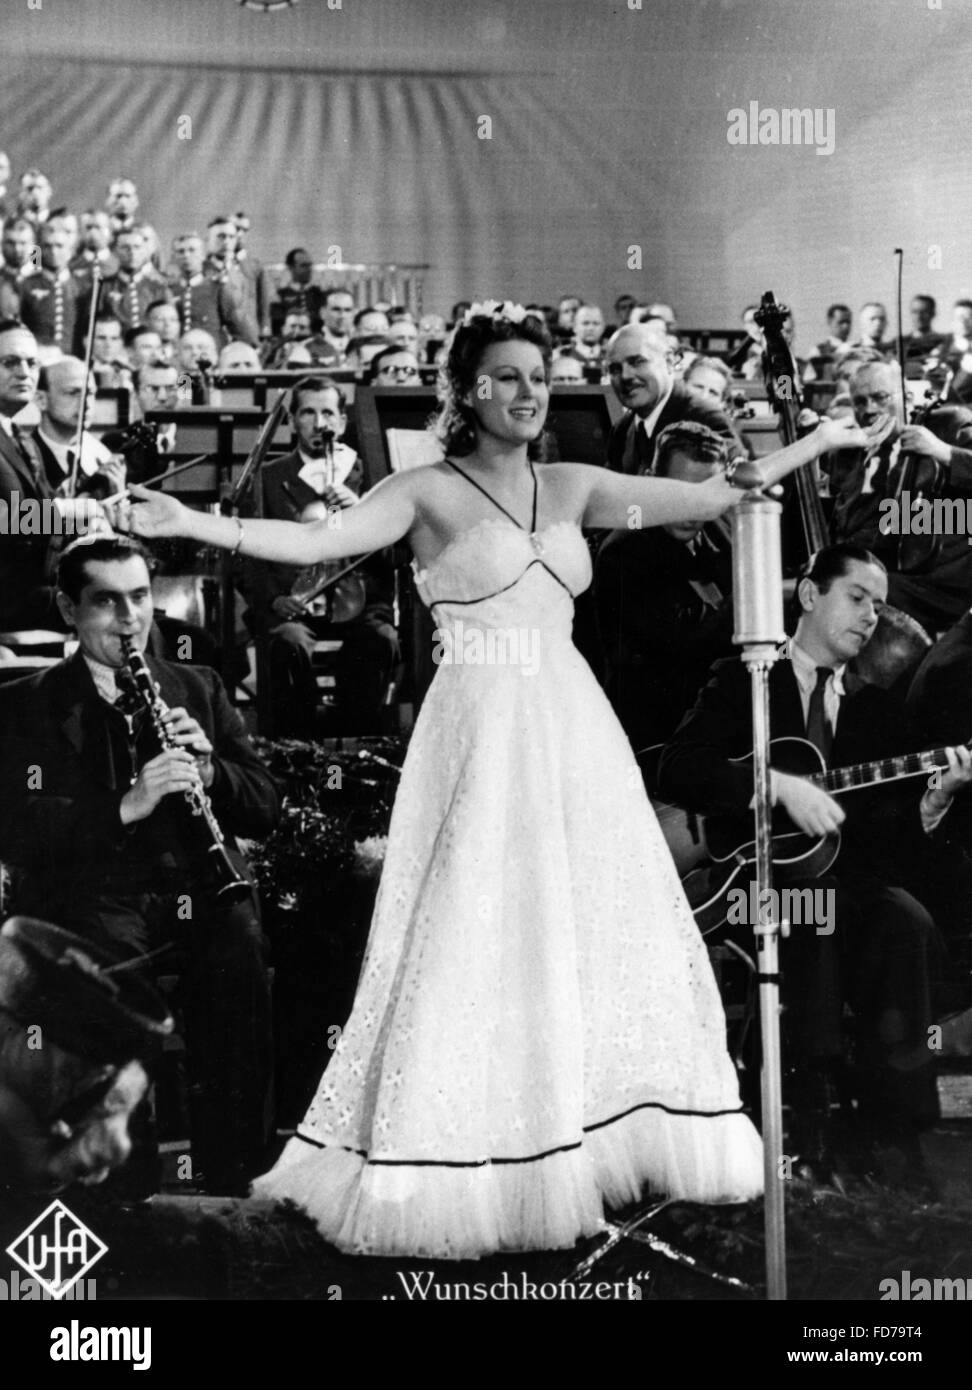 Marika Roekk in the film 'Wunschkonzert', 1940 Stock Photo - Alamy